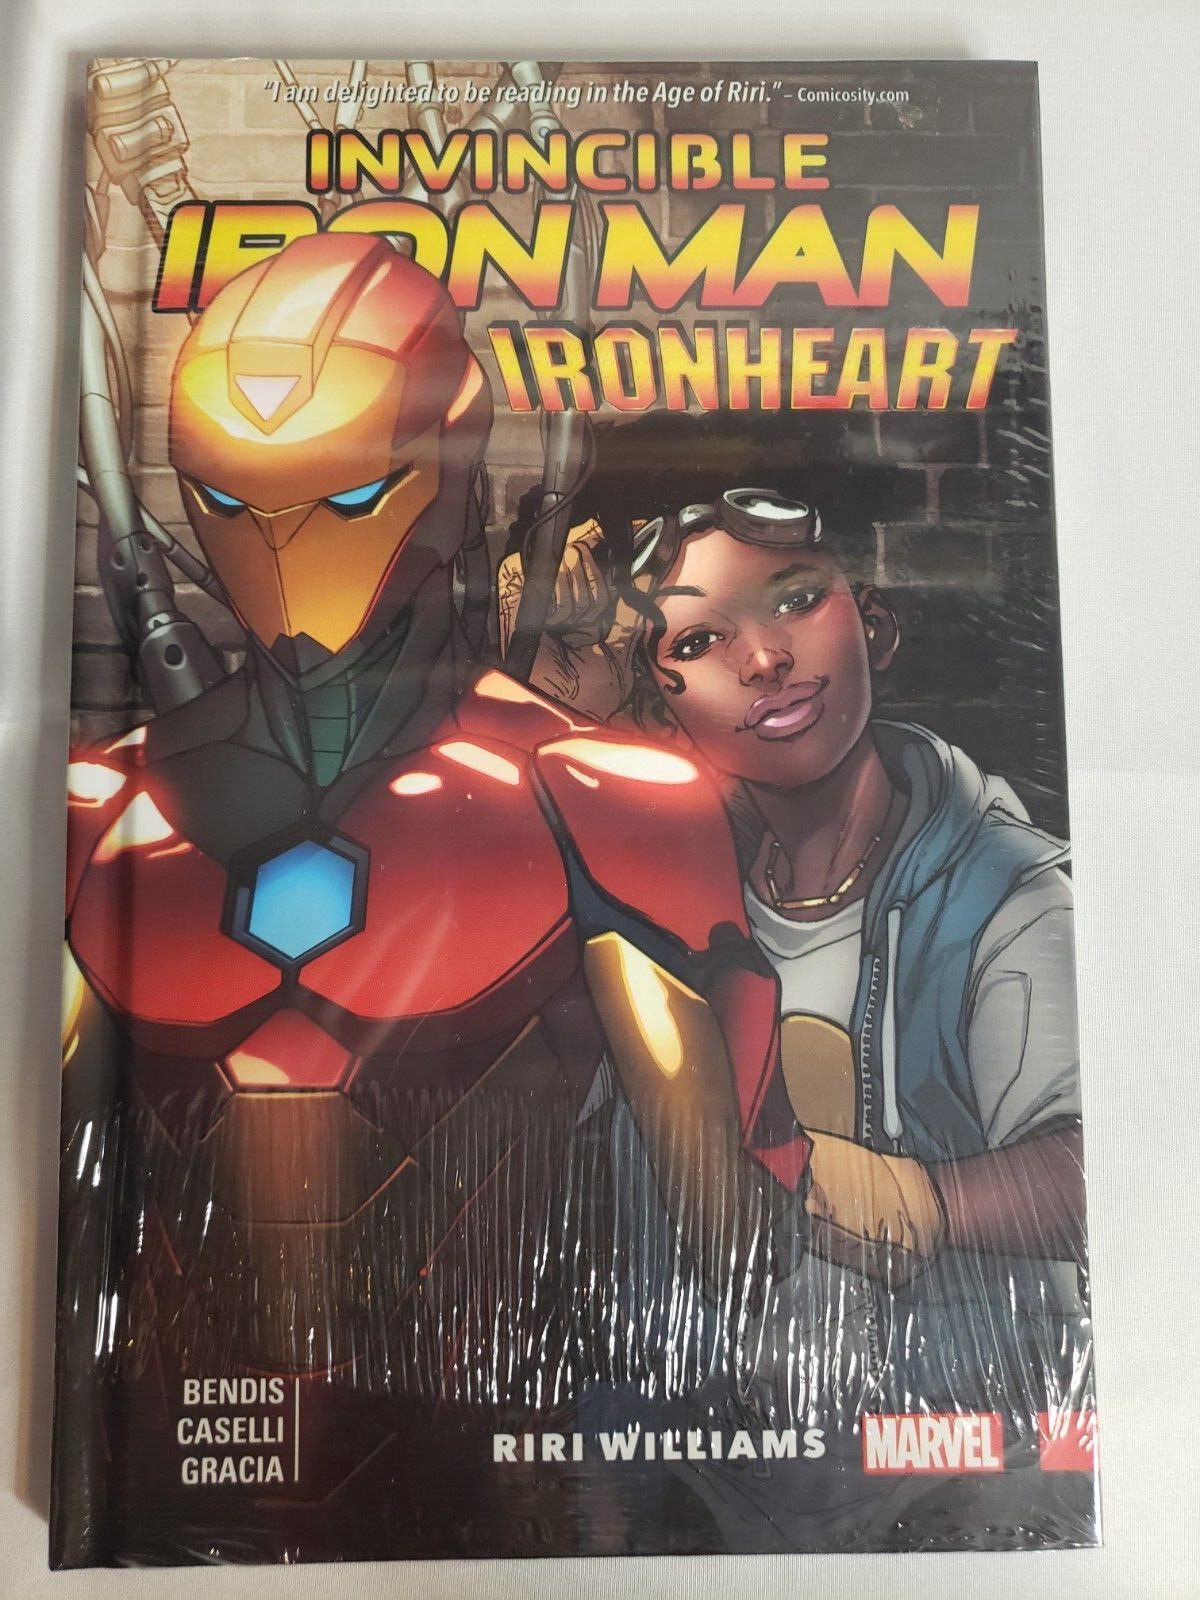 Invincible Iron Man: Ironheart Vol. 1: Riri Williams by Brian Michael Bendis HC